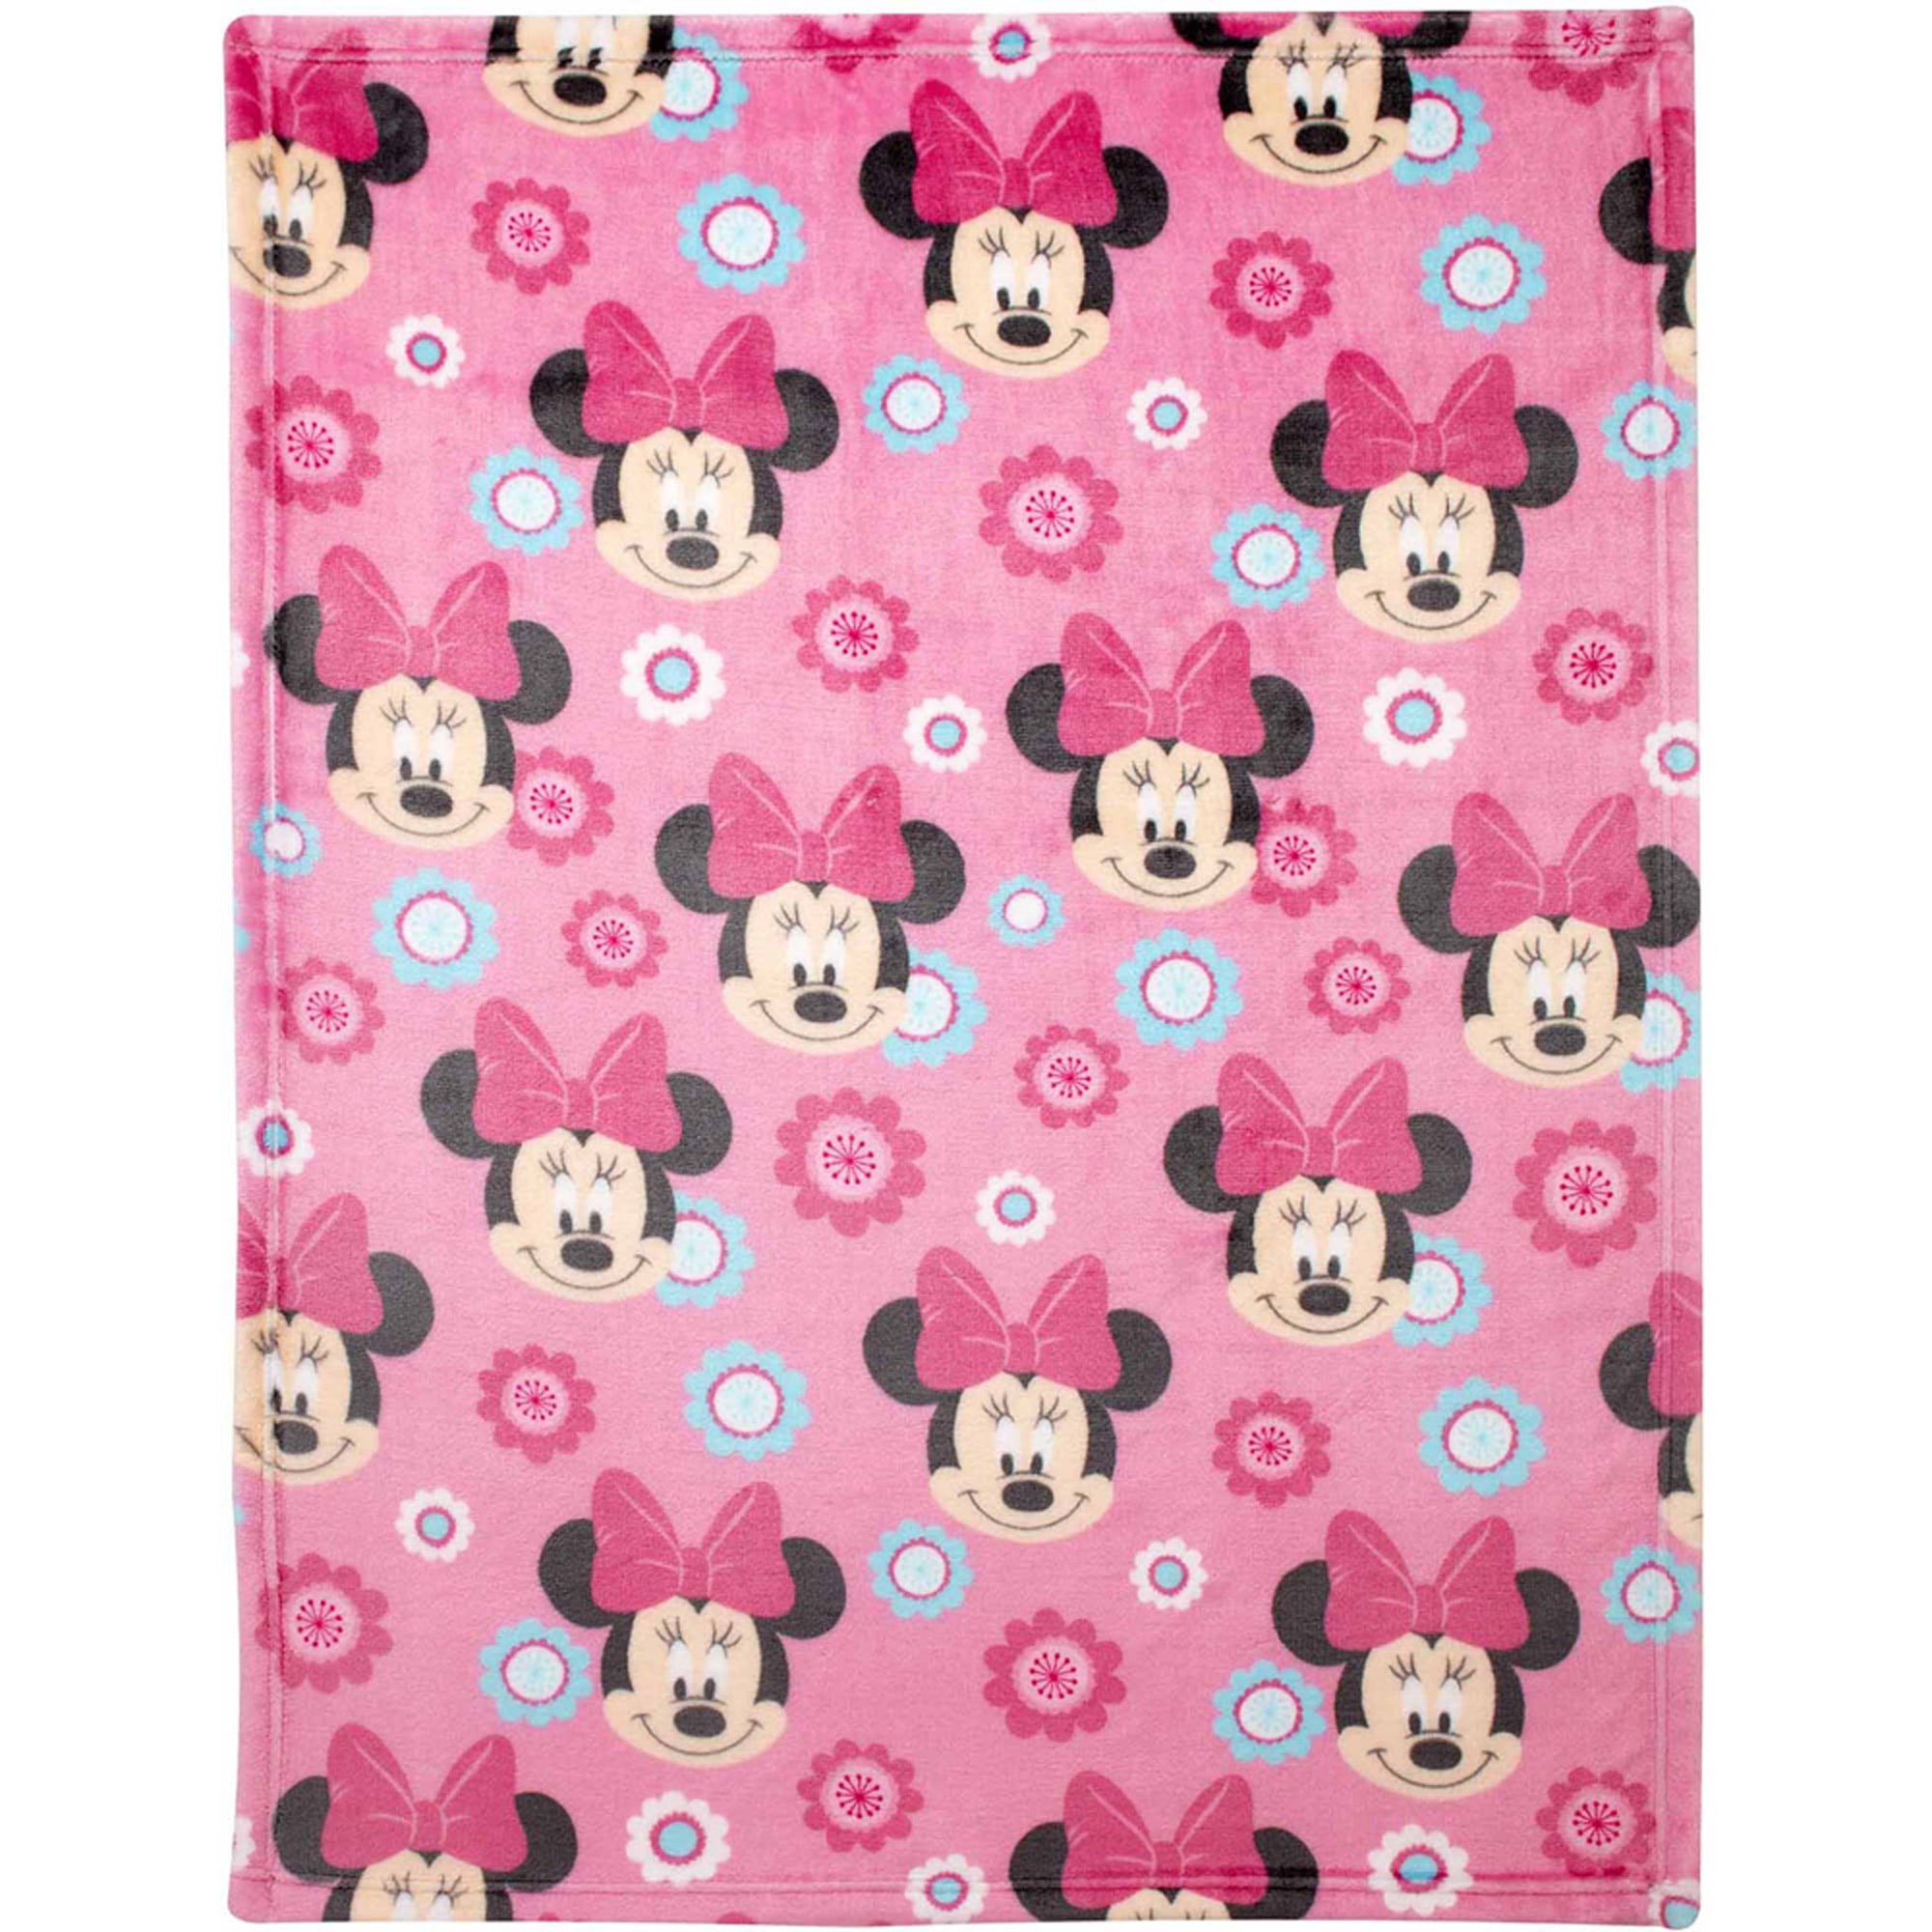 Disney Minnie Mouse Plush Printed Blanket Walmartcom Walmartcom